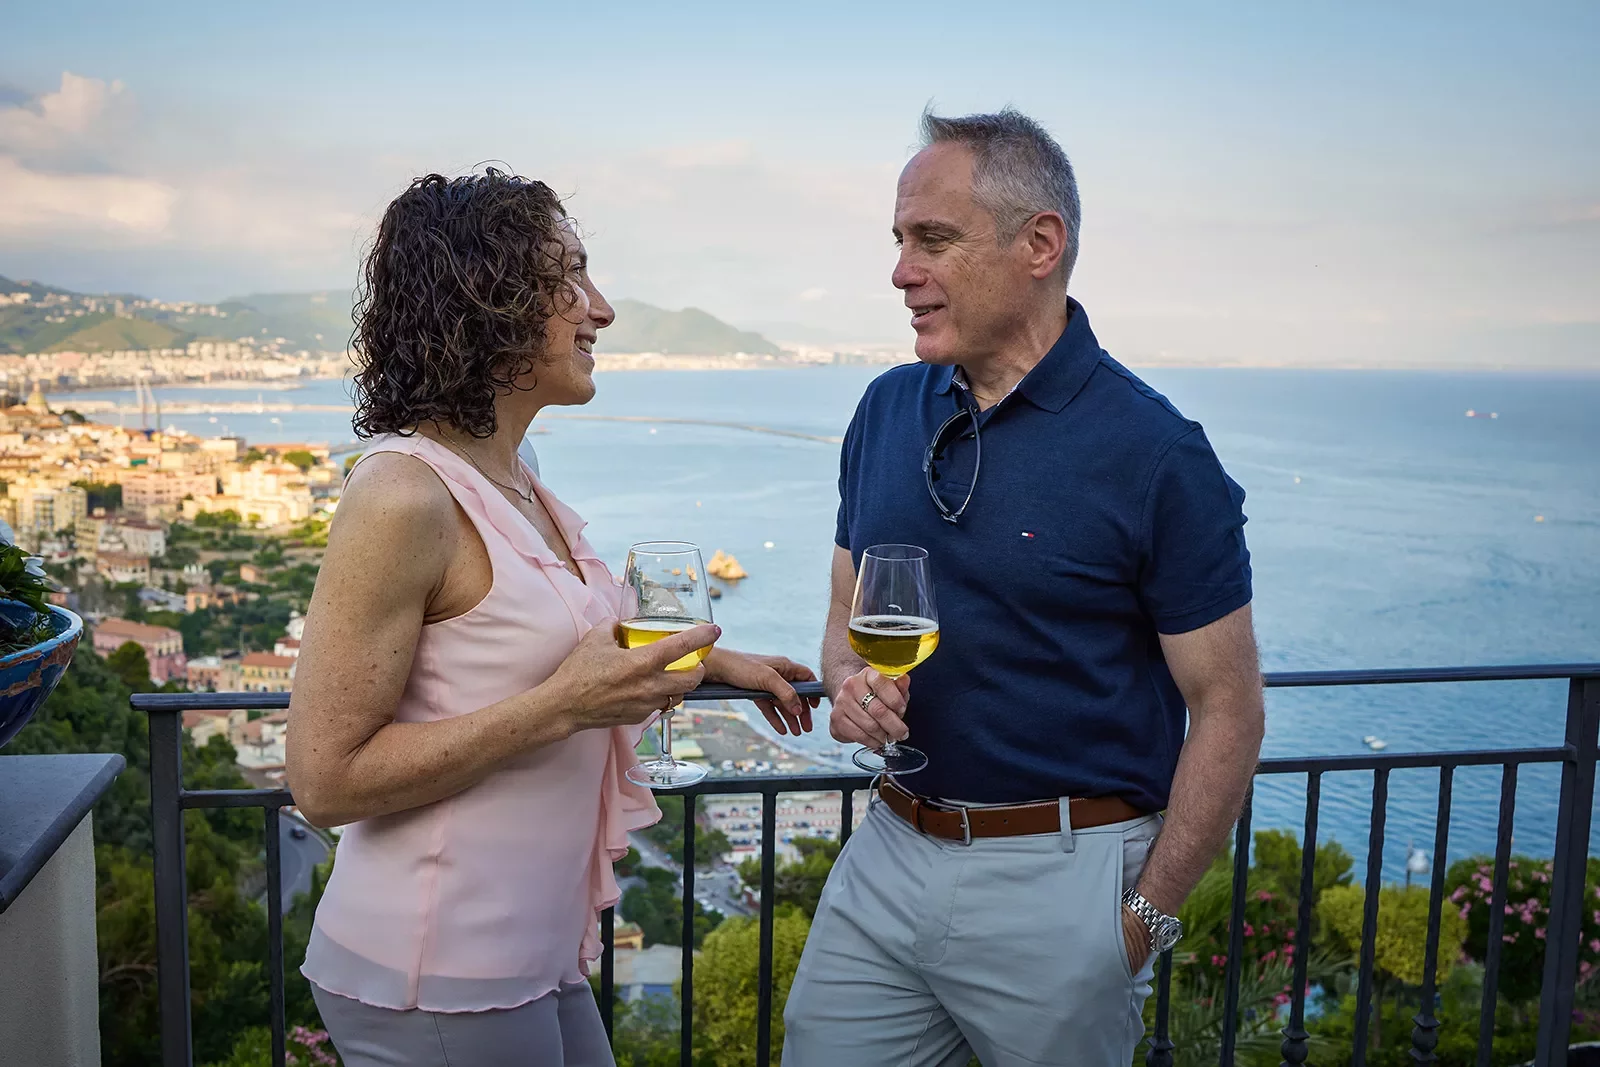 Two guests talking, wine glasses in hand, overlooking coastline.